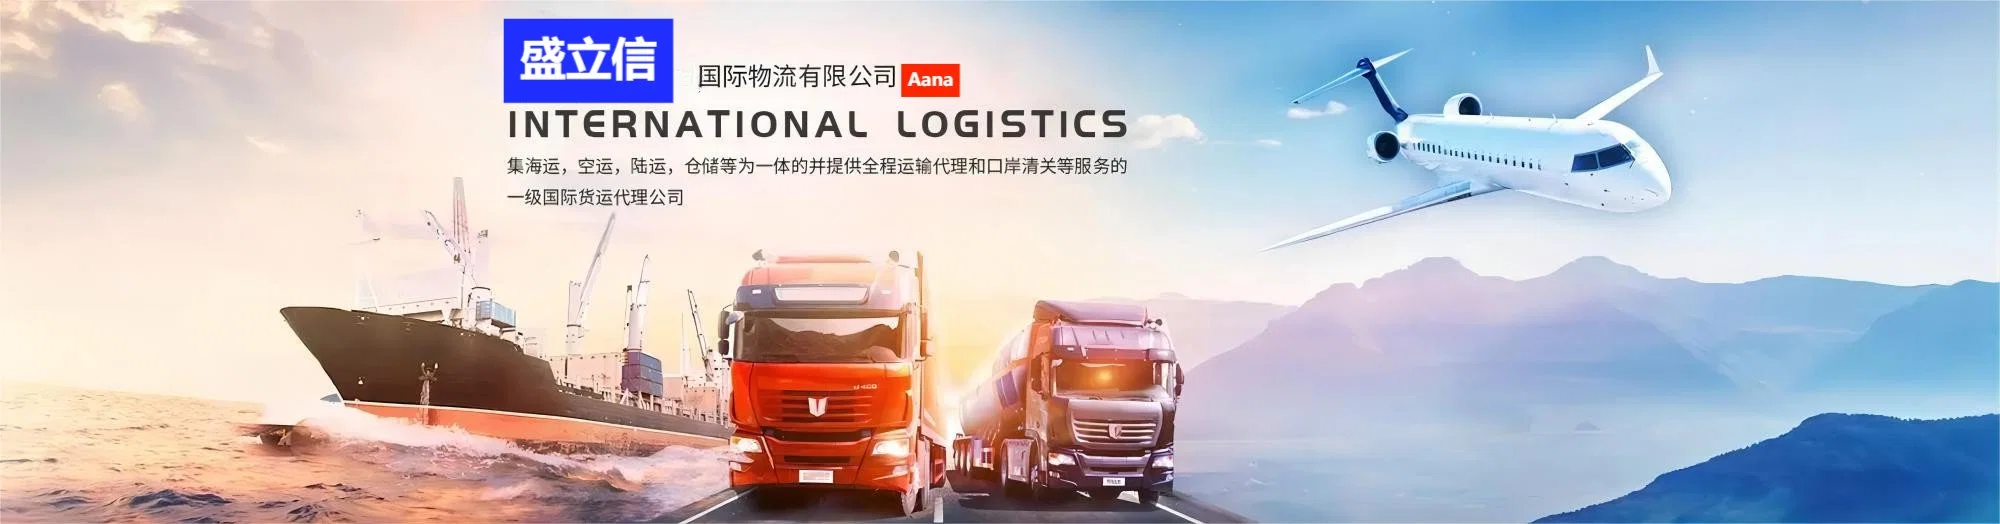 International Express China Air Freight Cargo Transportation Services Китай США ВЕЛИКОБРИТАНИЯ